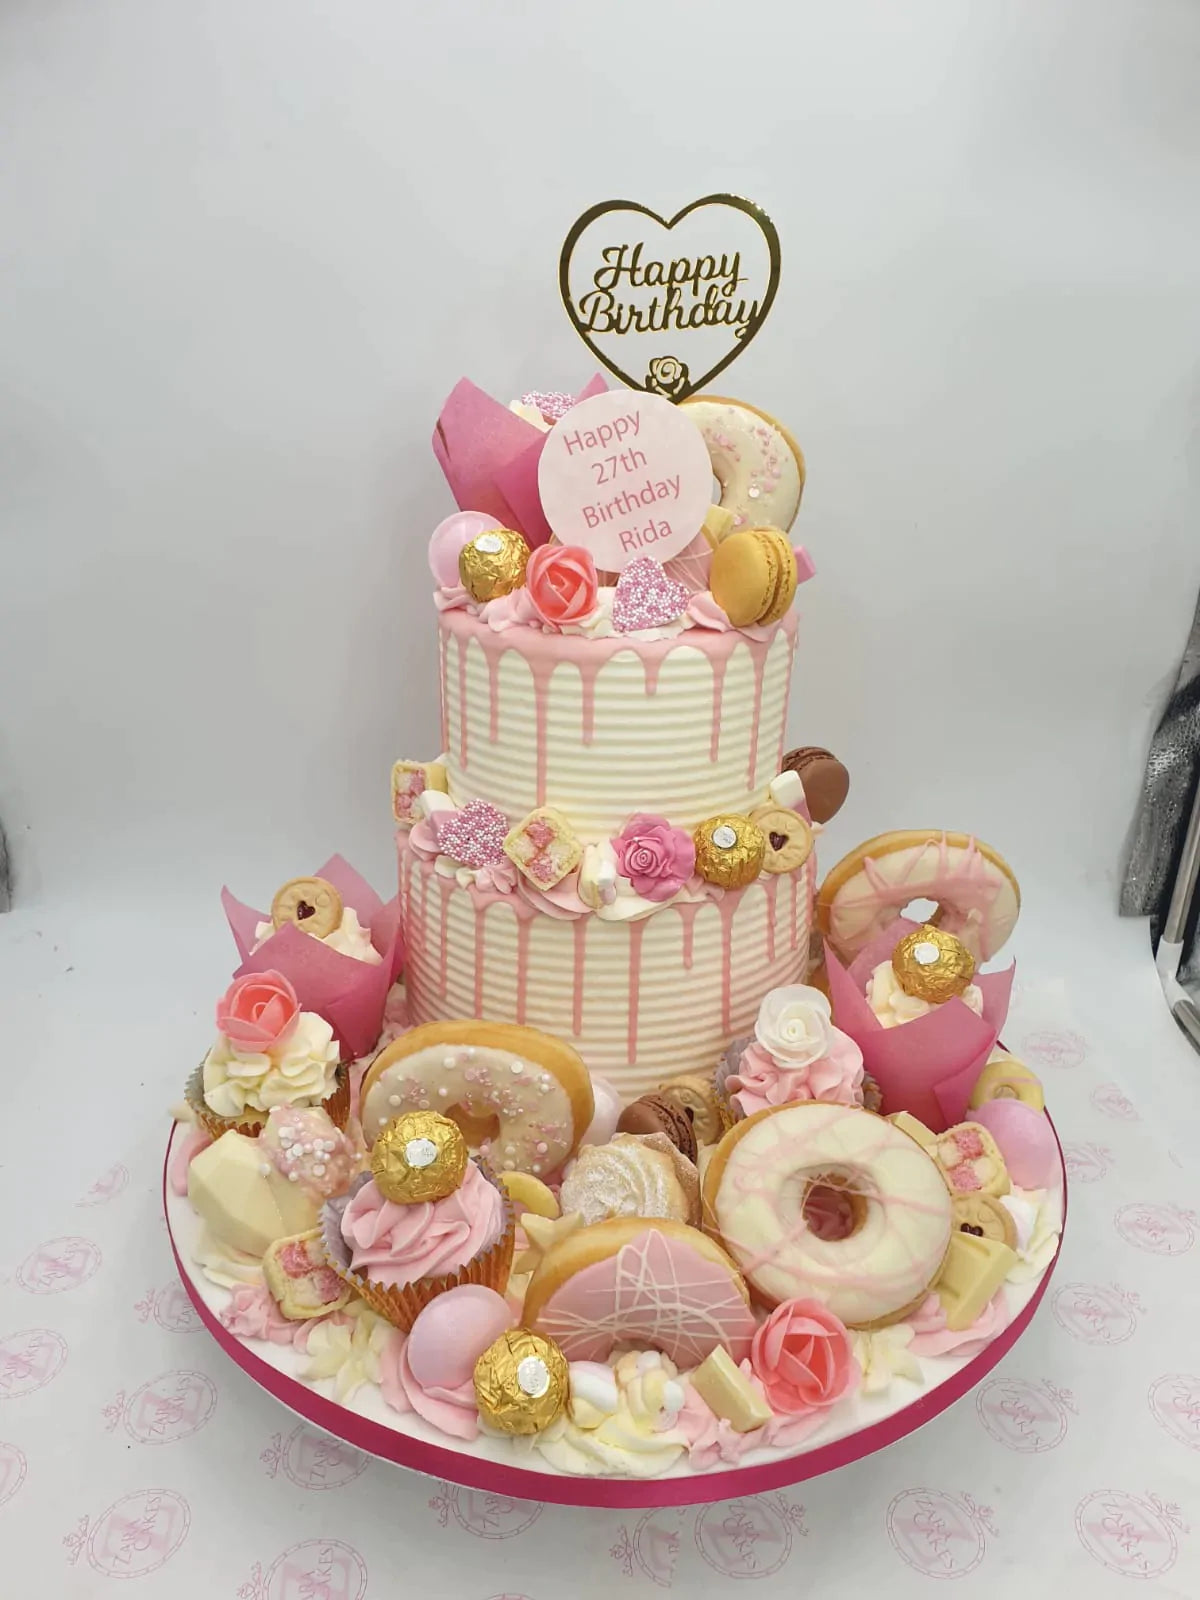 Asha's Cakes & More - 27th buttercream birthday cake❤ | Facebook